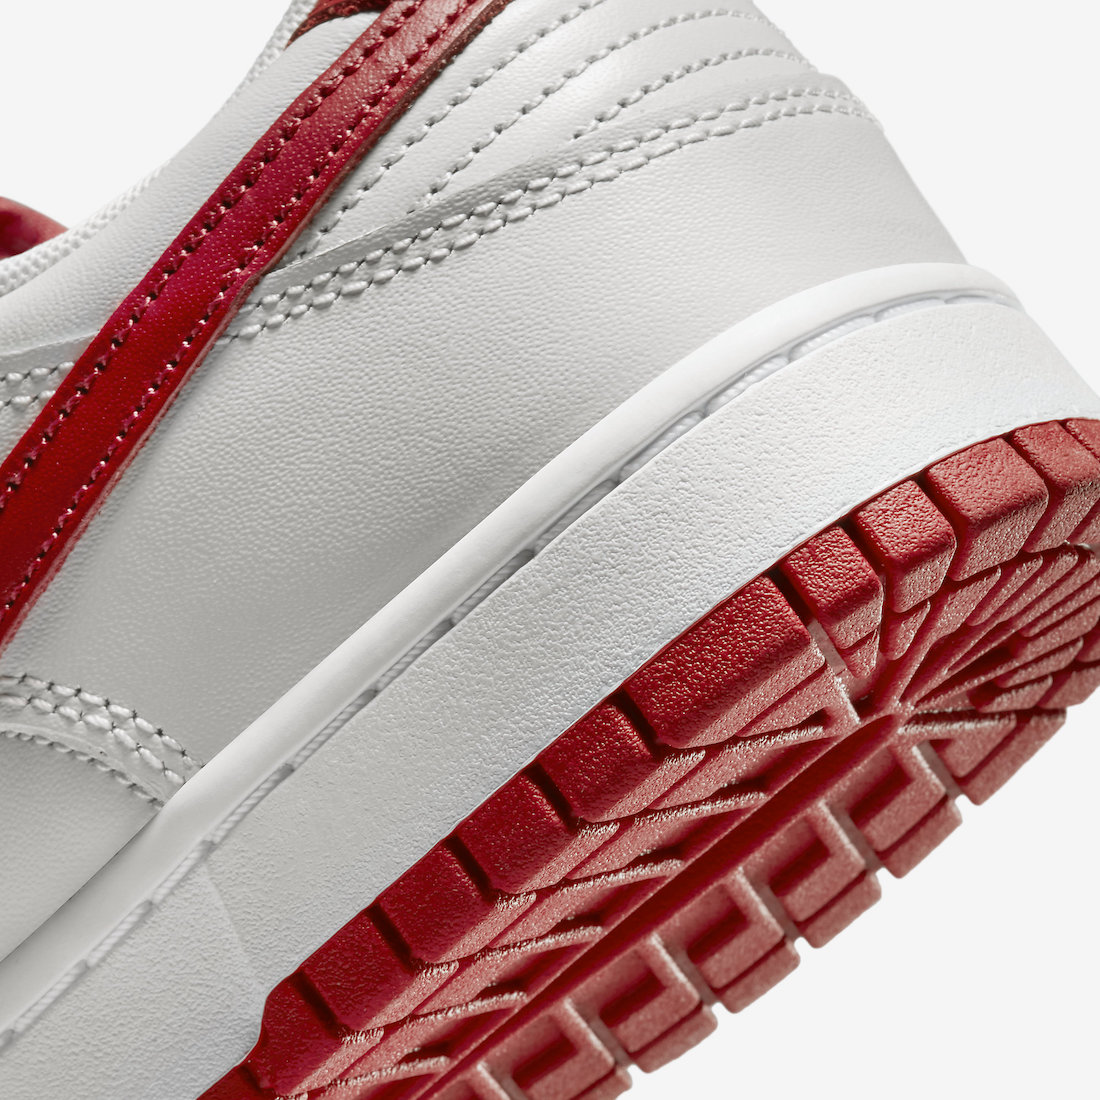 Nike Dunk Low Vast Grey Varsity Red FJ0832-011 Release Date Info